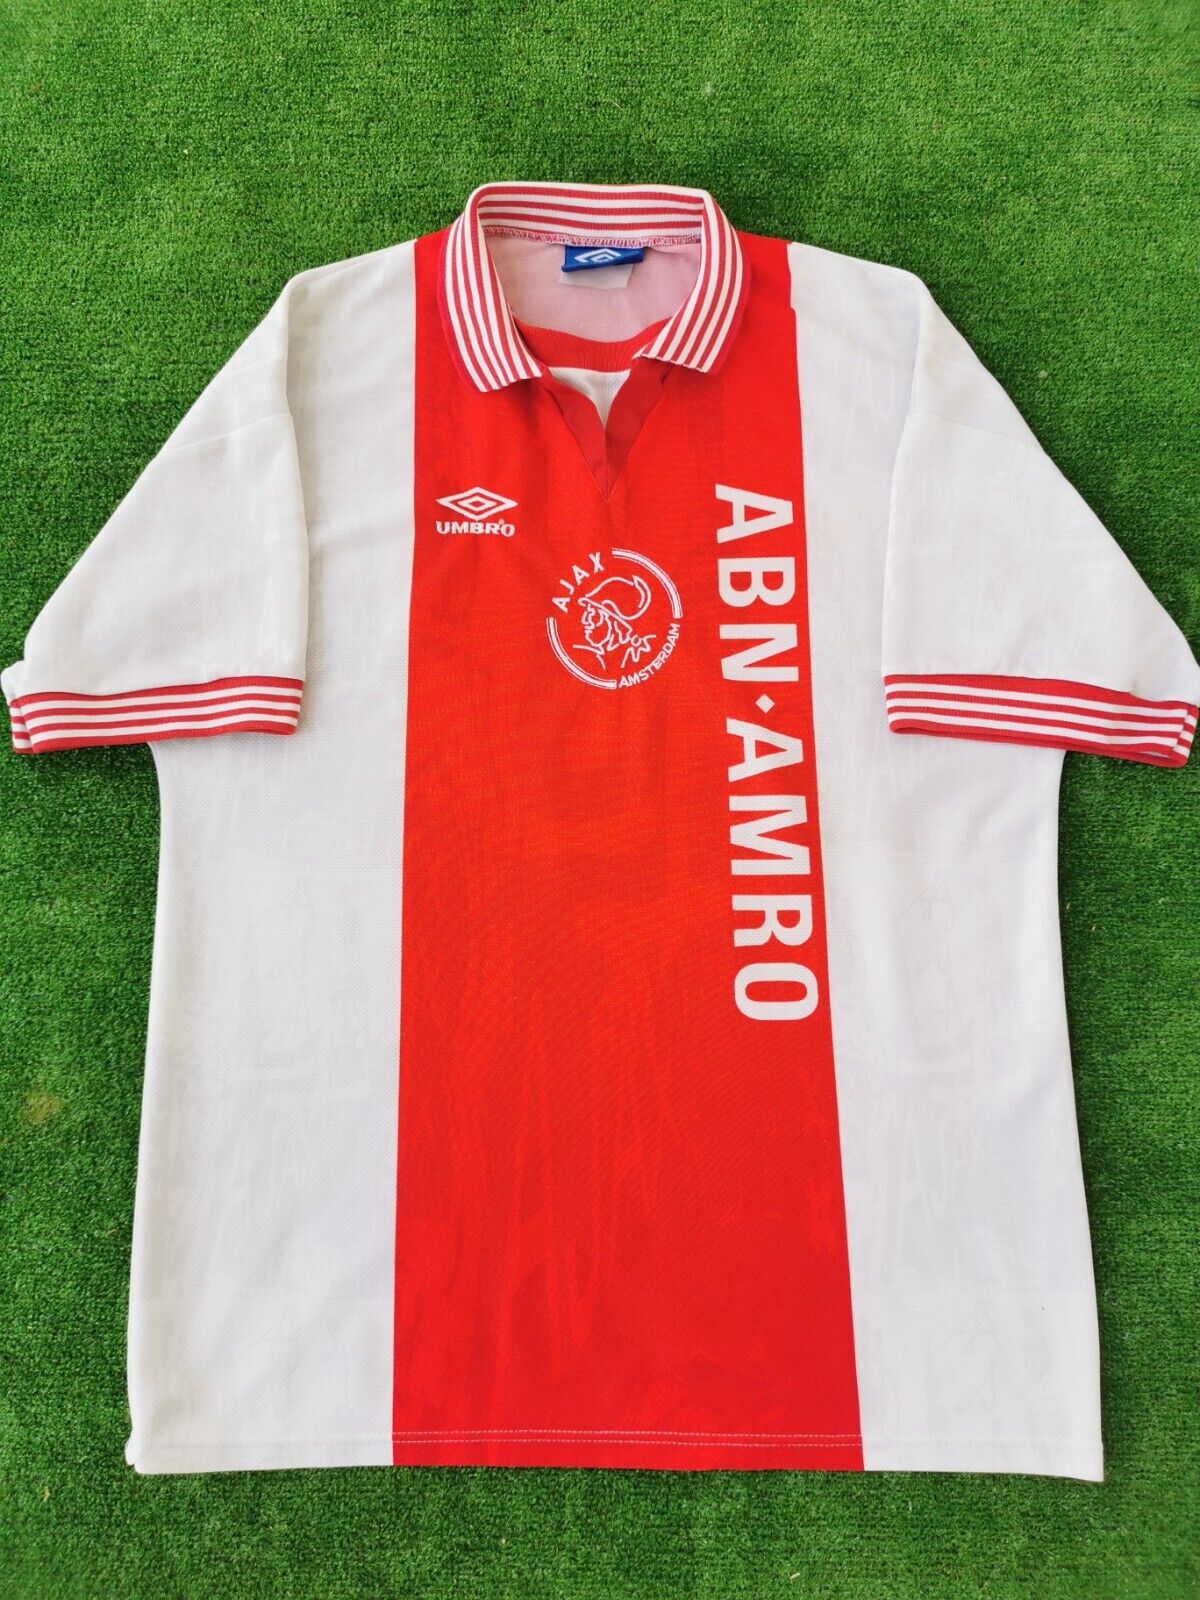 Maak het zwaar Raar Pasen Ajax Amsterdam Home Kit Shirt L Vintage Football Umbro Jersey 1996 Trikot |  eBay